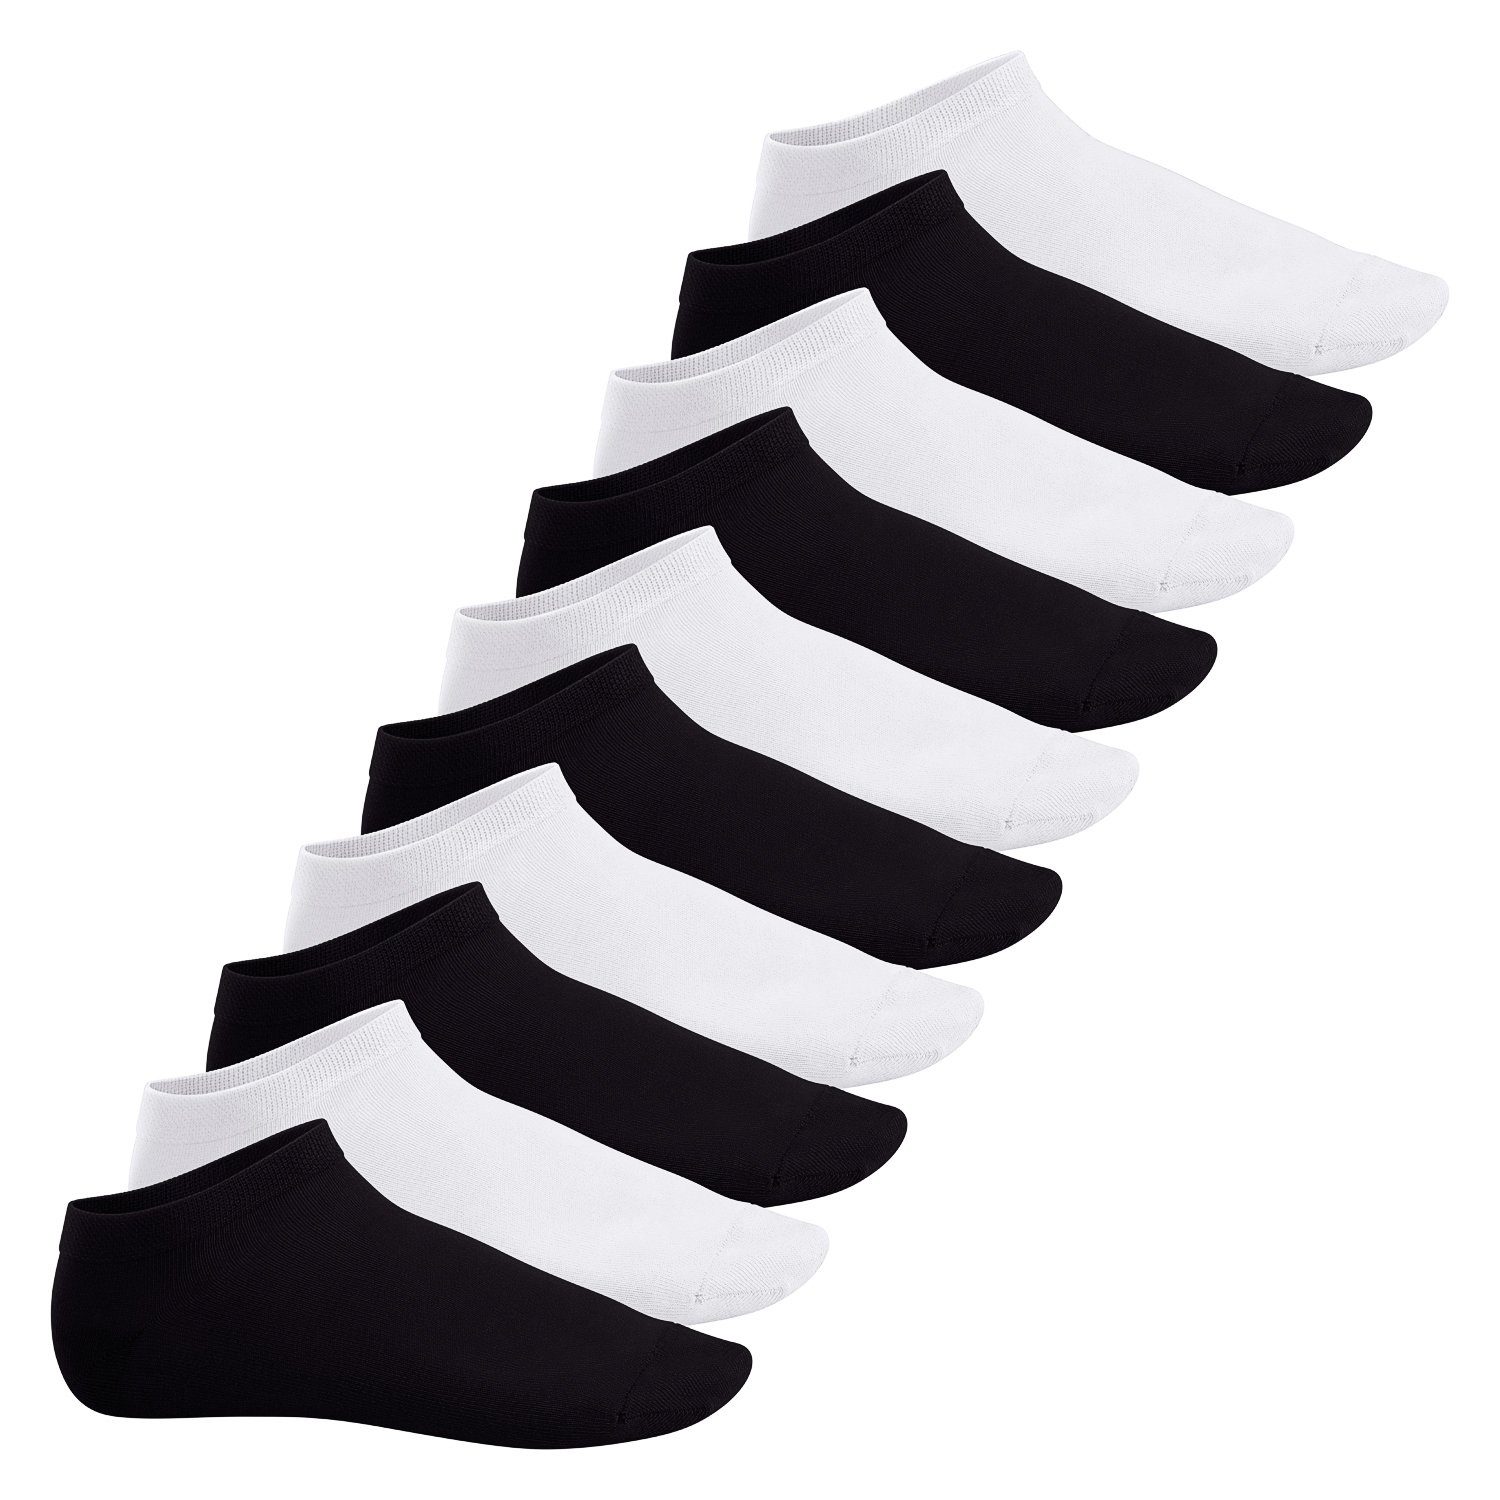 Footstar Füßlinge Sneak It! Damen & Herren Sneakersocken (10/20 Paar) kurze Socken Schwarz / Weiss Mix (5x Schwarz + 5x Weiss)